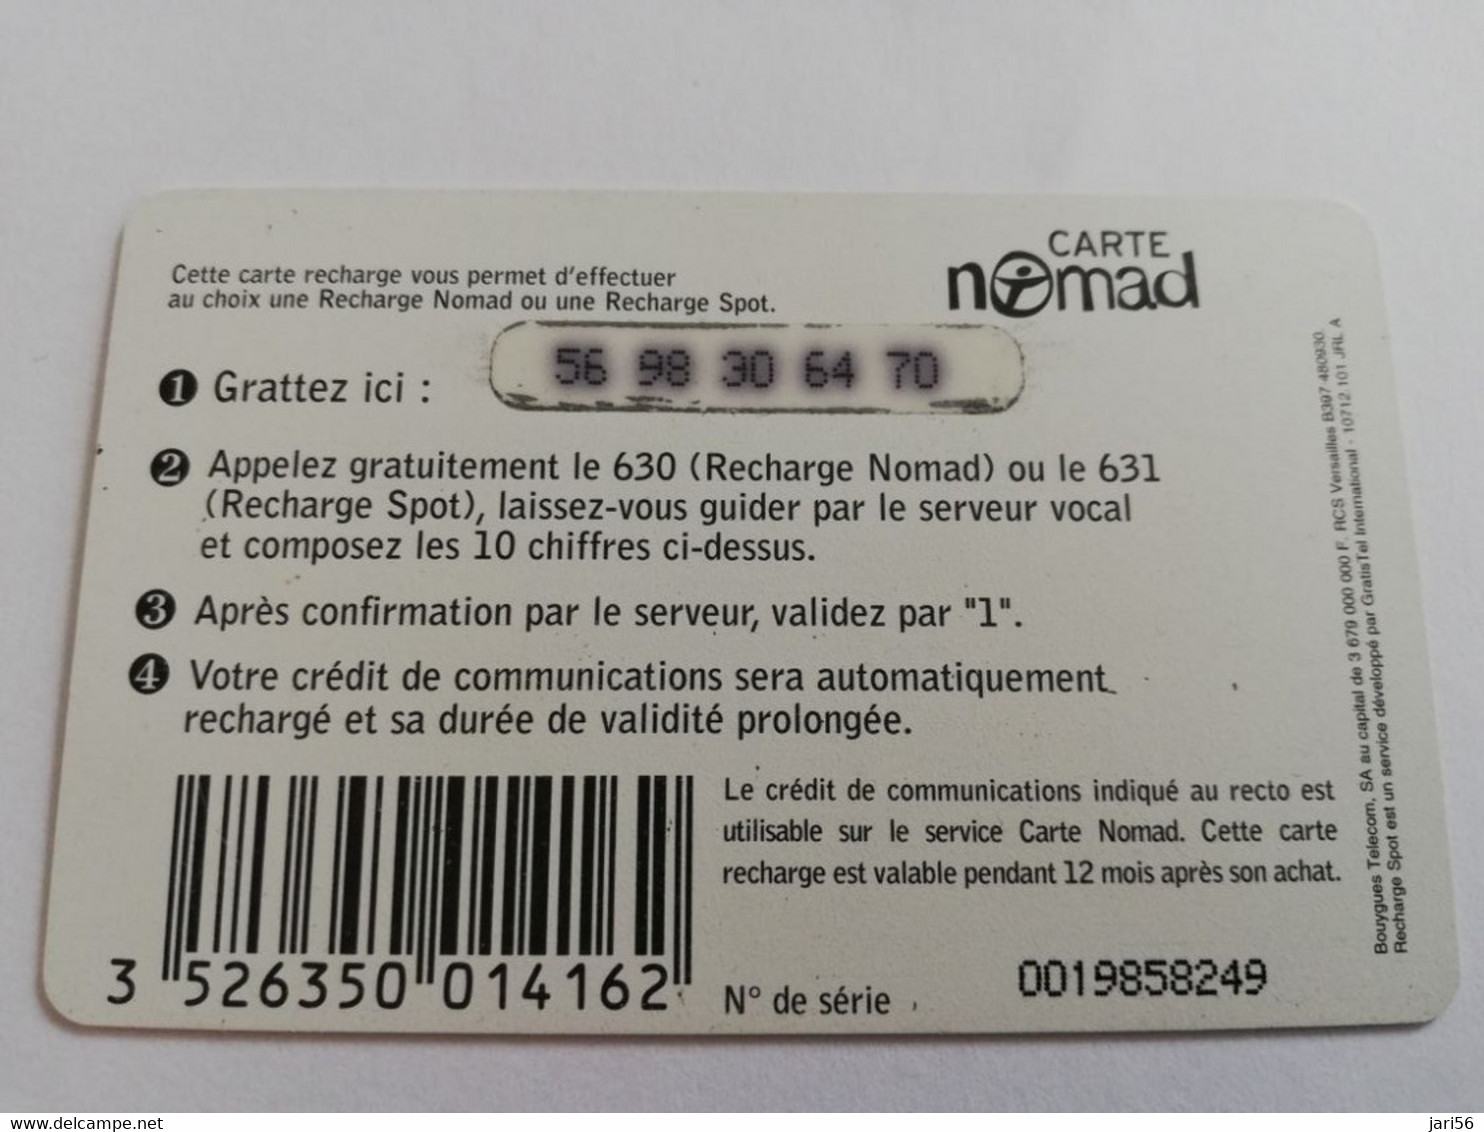 FRANCE/FRANKRIJK  NOMAD CARTE  SMALL NOMAD OU SPOT    95FR  PREPAID  USED    ** 9437** - Nachladekarten (Handy/SIM)